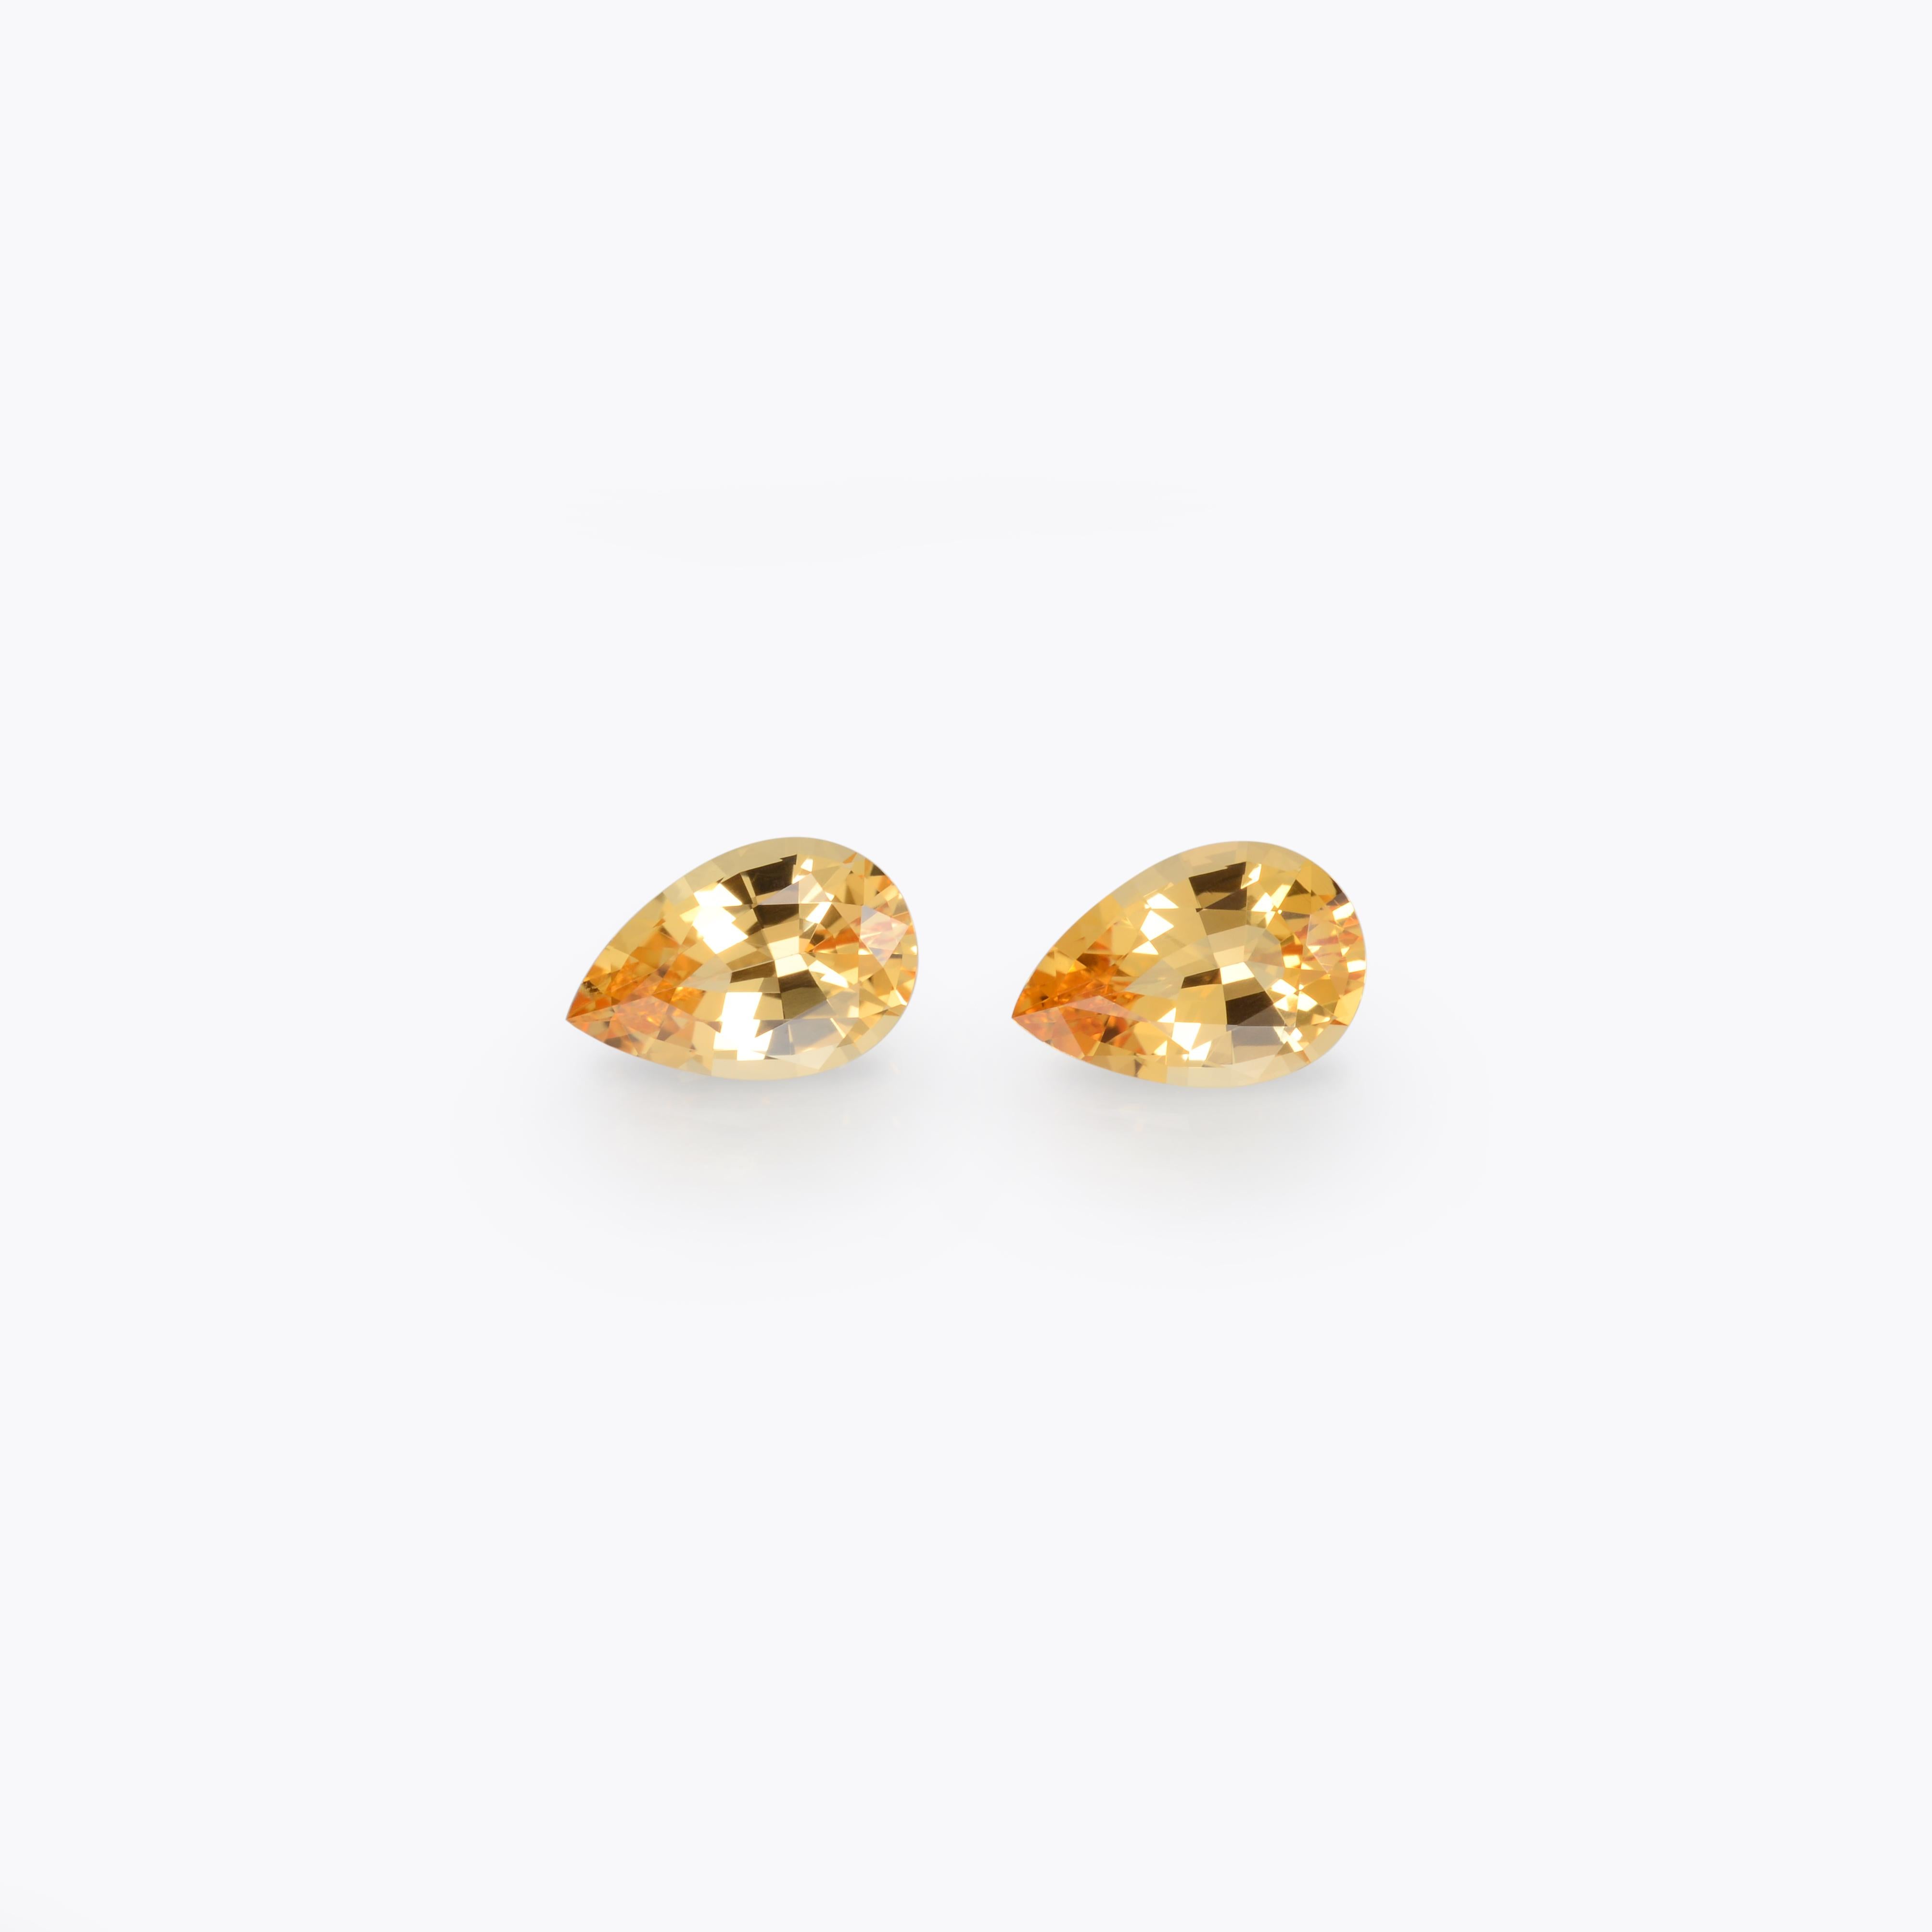 Pear Cut Imperial Topaz Earrings Loose Gemstones Unmounted 2.53 Carat Yellow Pair For Sale